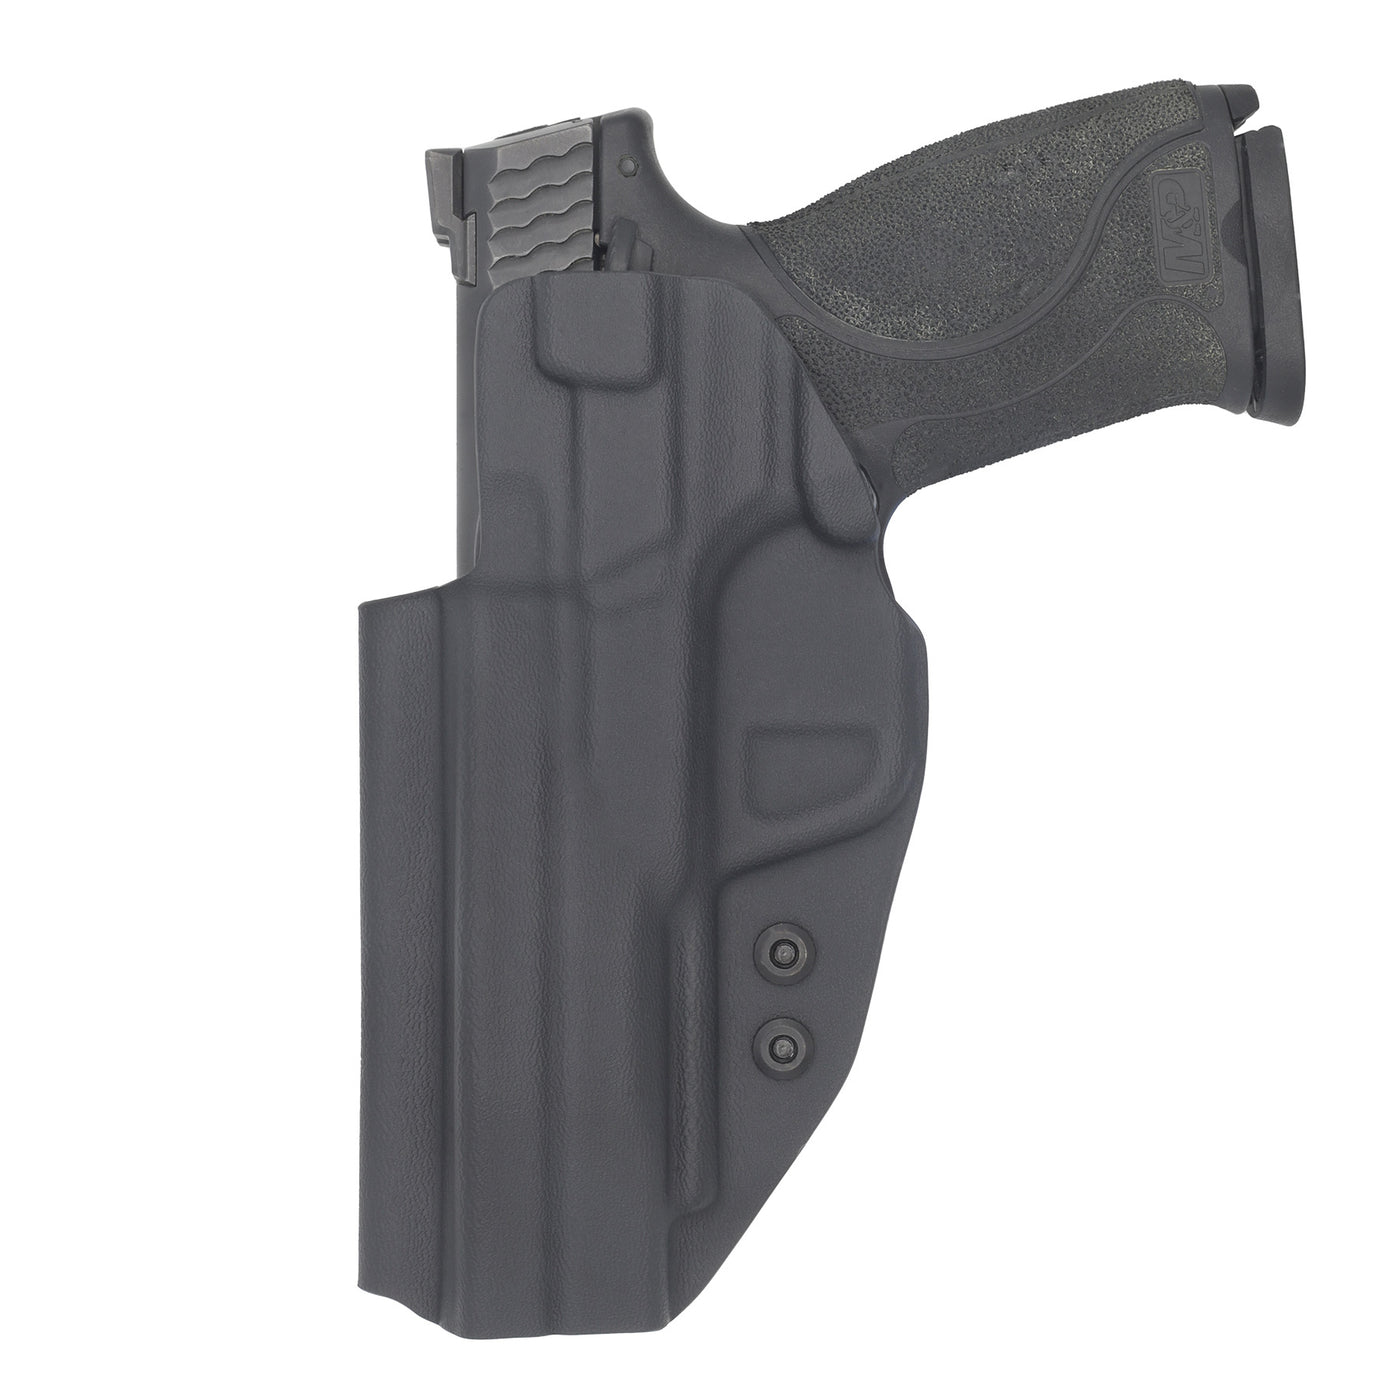 C&G Holsters custom Covert IWB kydex holster for S&W M&P 2.0 9/40 4.25" back with gun